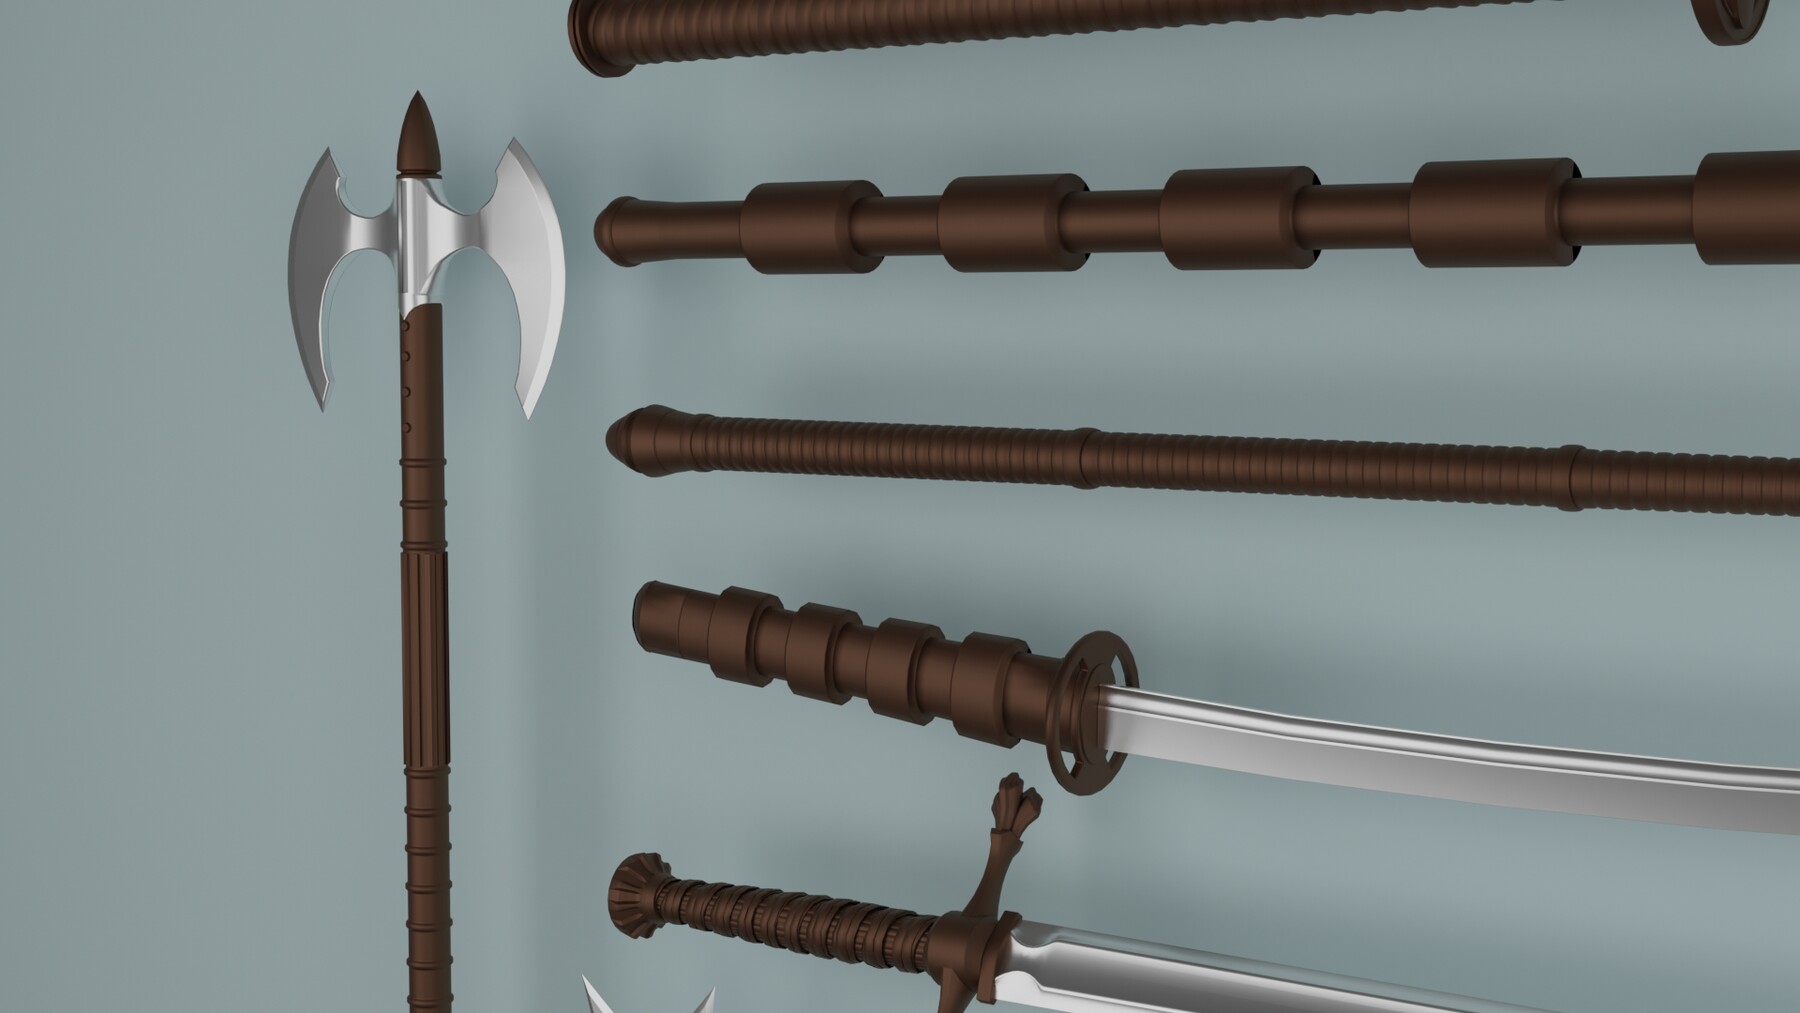 Sword Axe Spear in Weapons - UE Marketplace